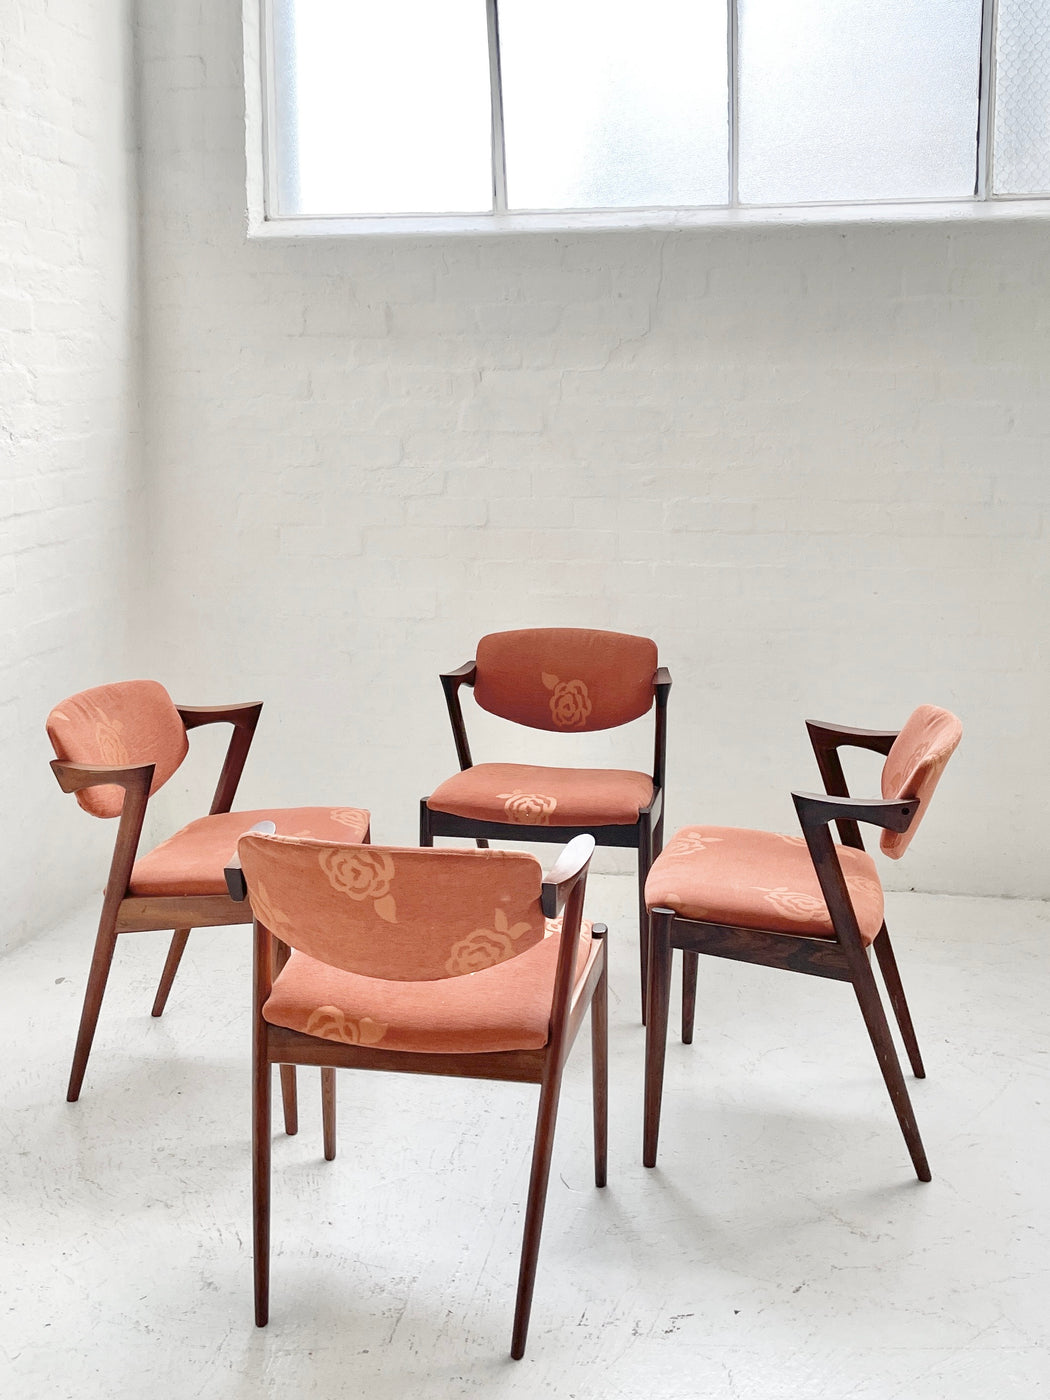 Kai Kristiansen 'Model #42' Rosewood Chairs